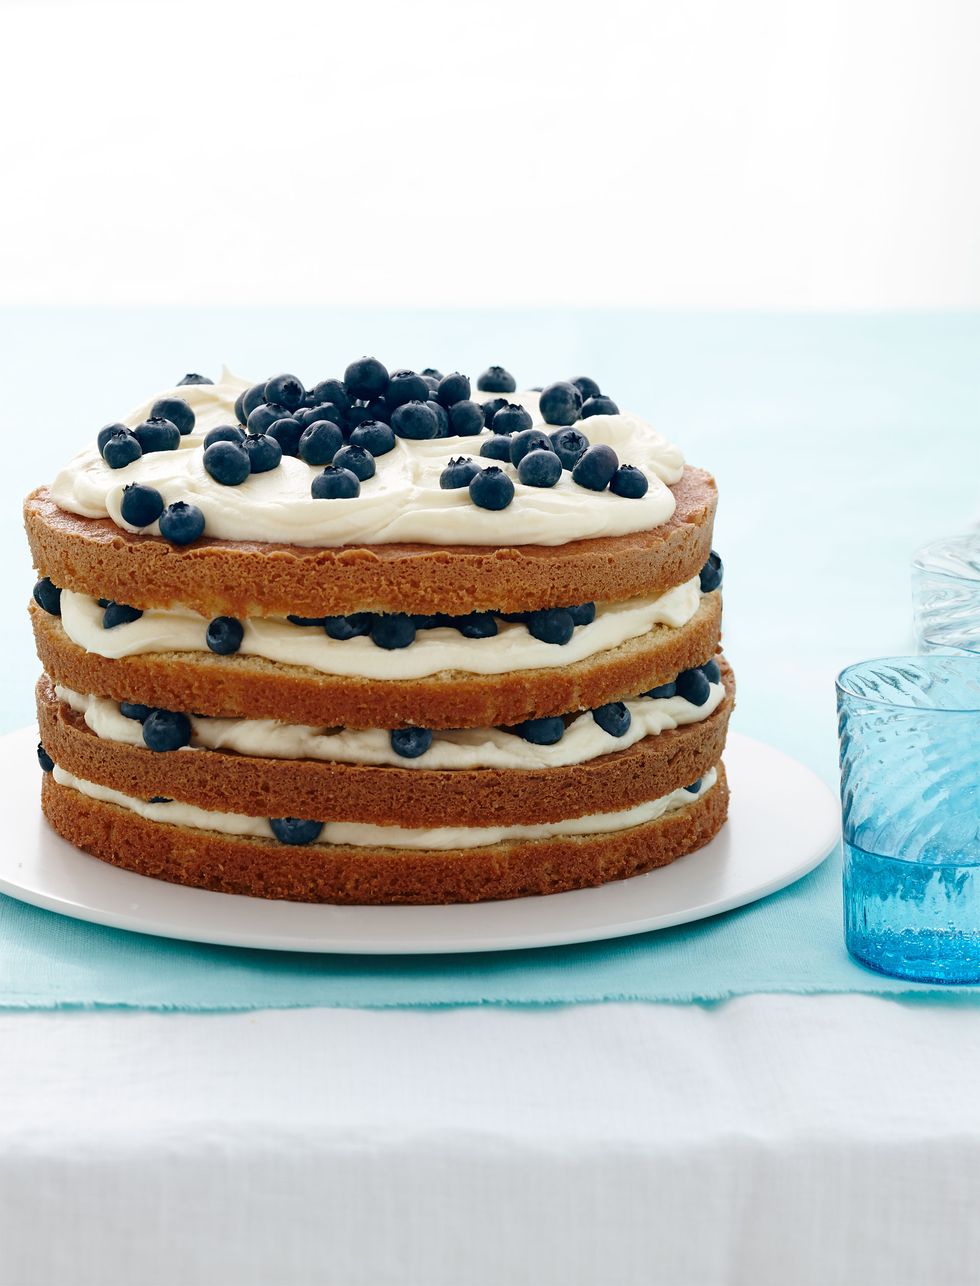 Lemon Blueberry Layer Cake  Lemon Blueberry Layer Cake 54f8f876d51f5   lemon blueberry layer cake recipe wdy0414 s2